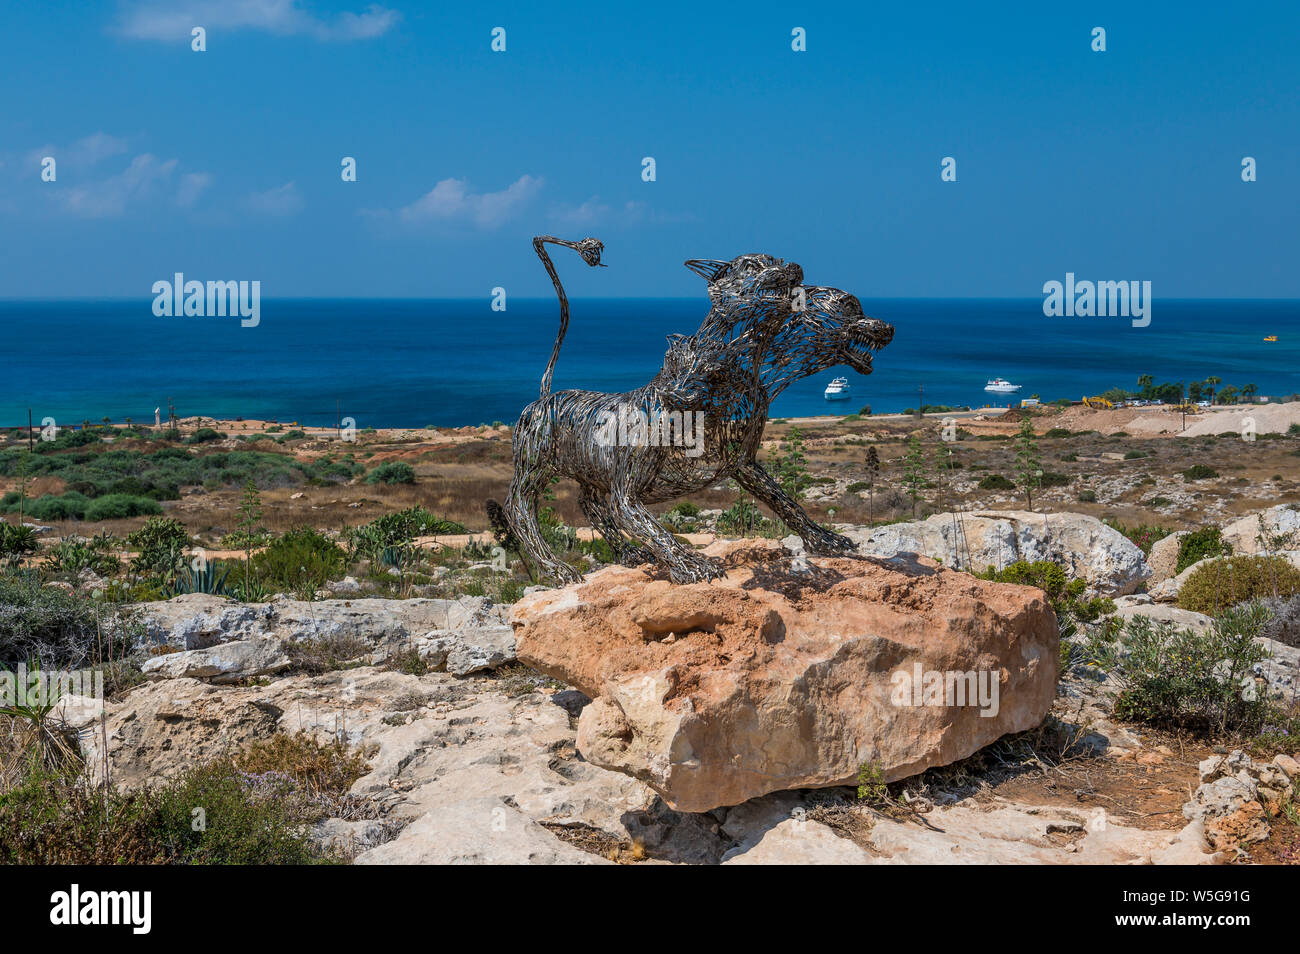 Parc de sculptures d'Ayia Napa, Chypre Banque D'Images